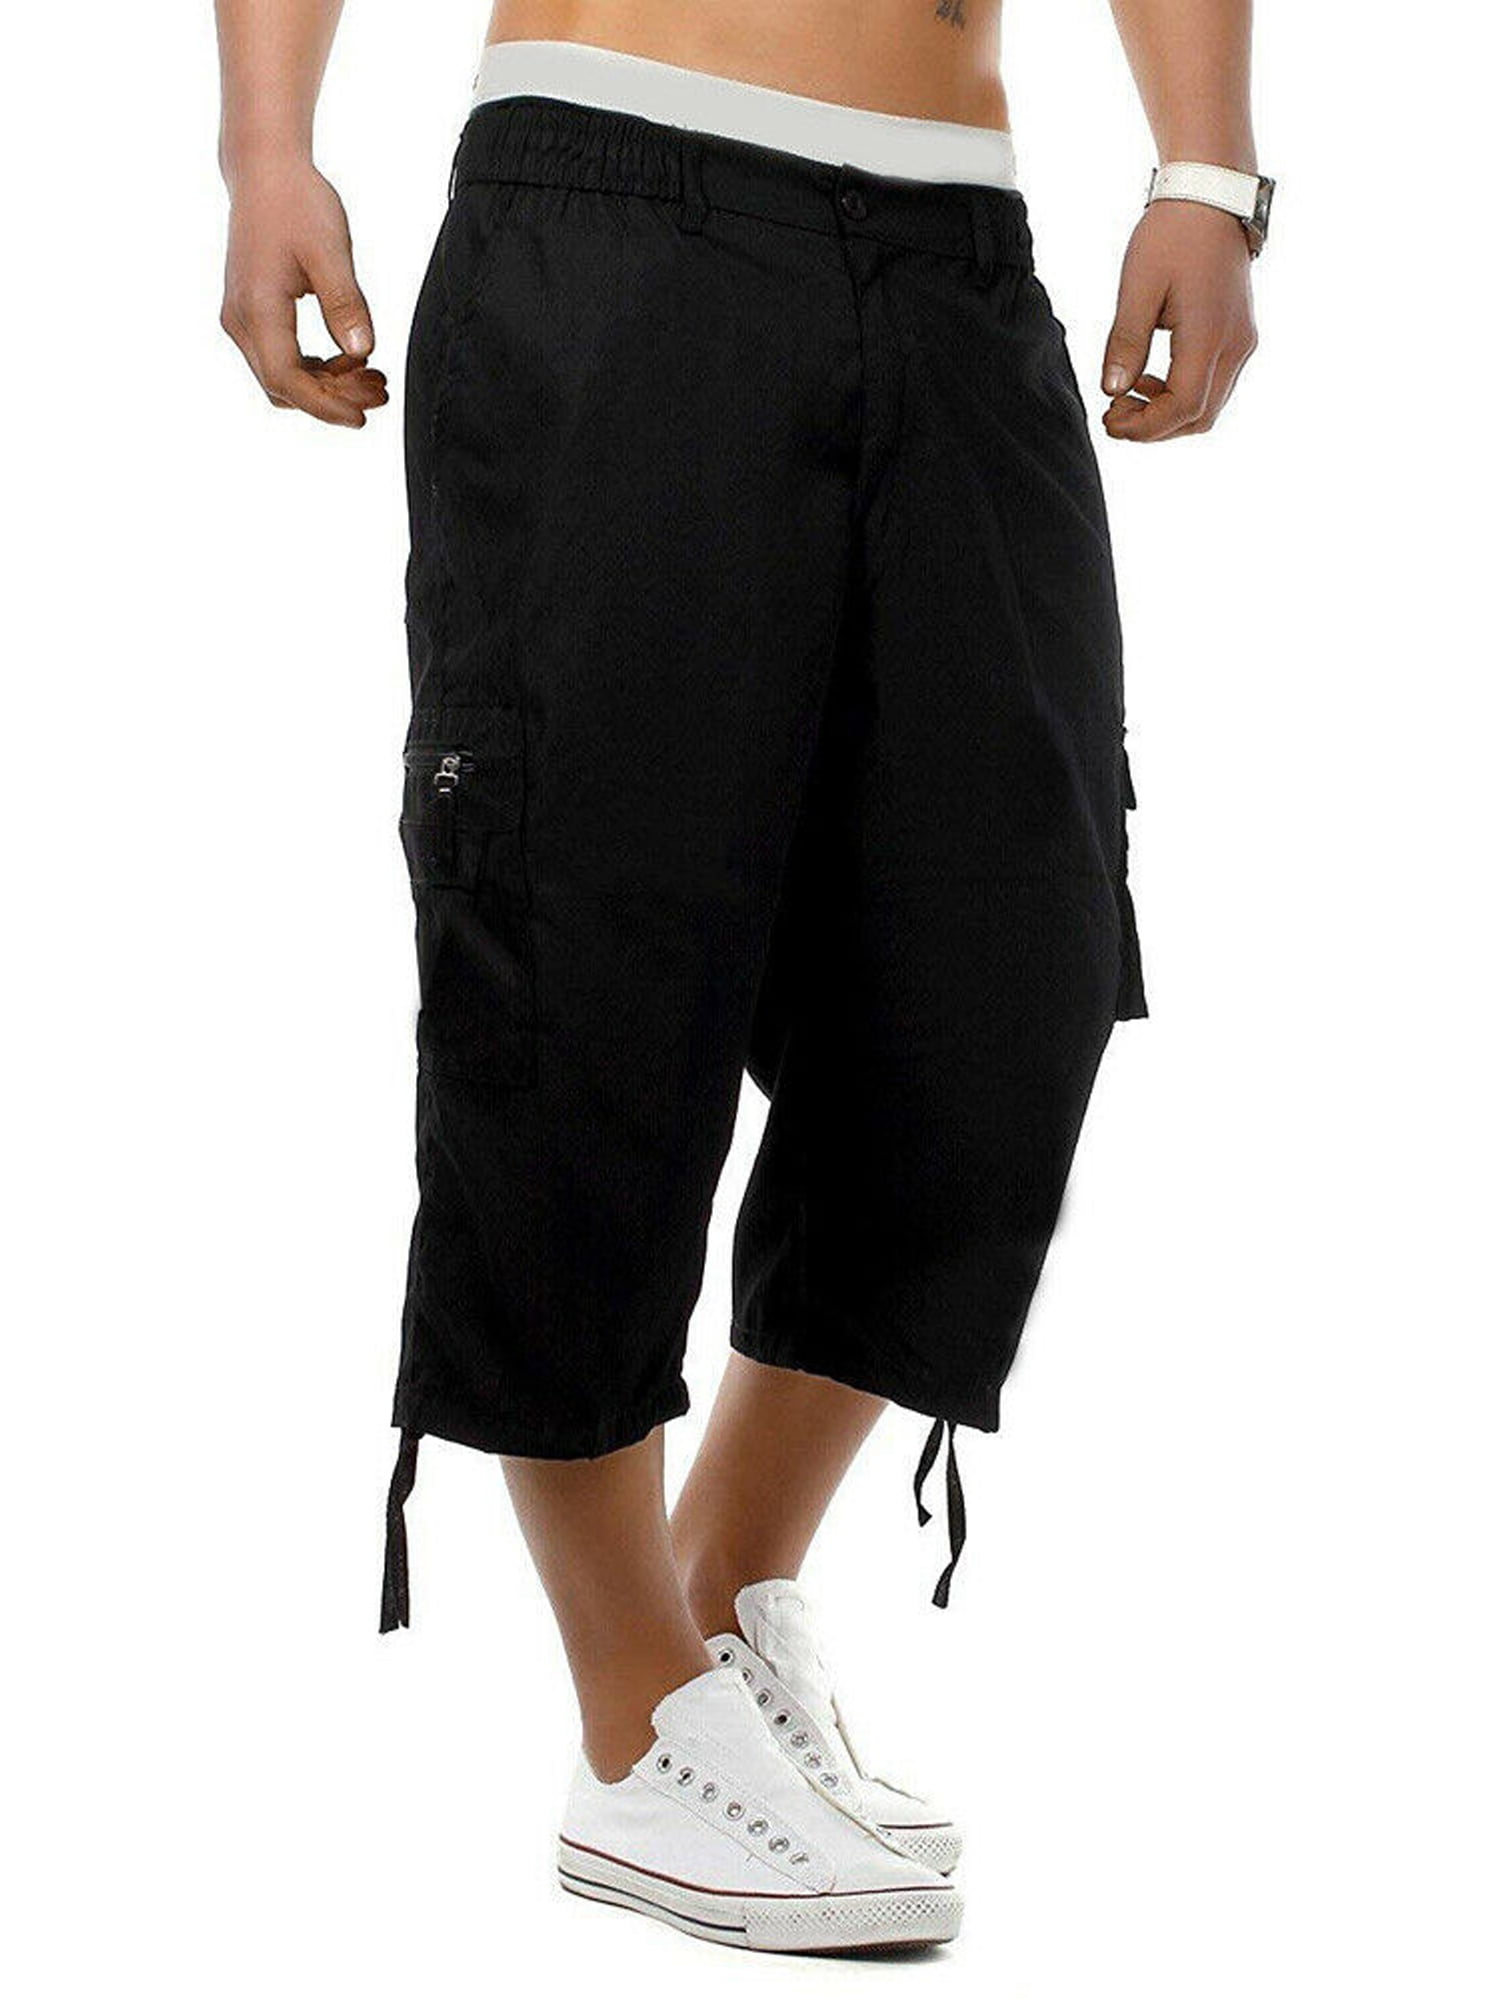 LUCAMORE Mens Casual Cargo Shorts Below Knee Loose Fit Multi-Pocket Capri Long Shorts 